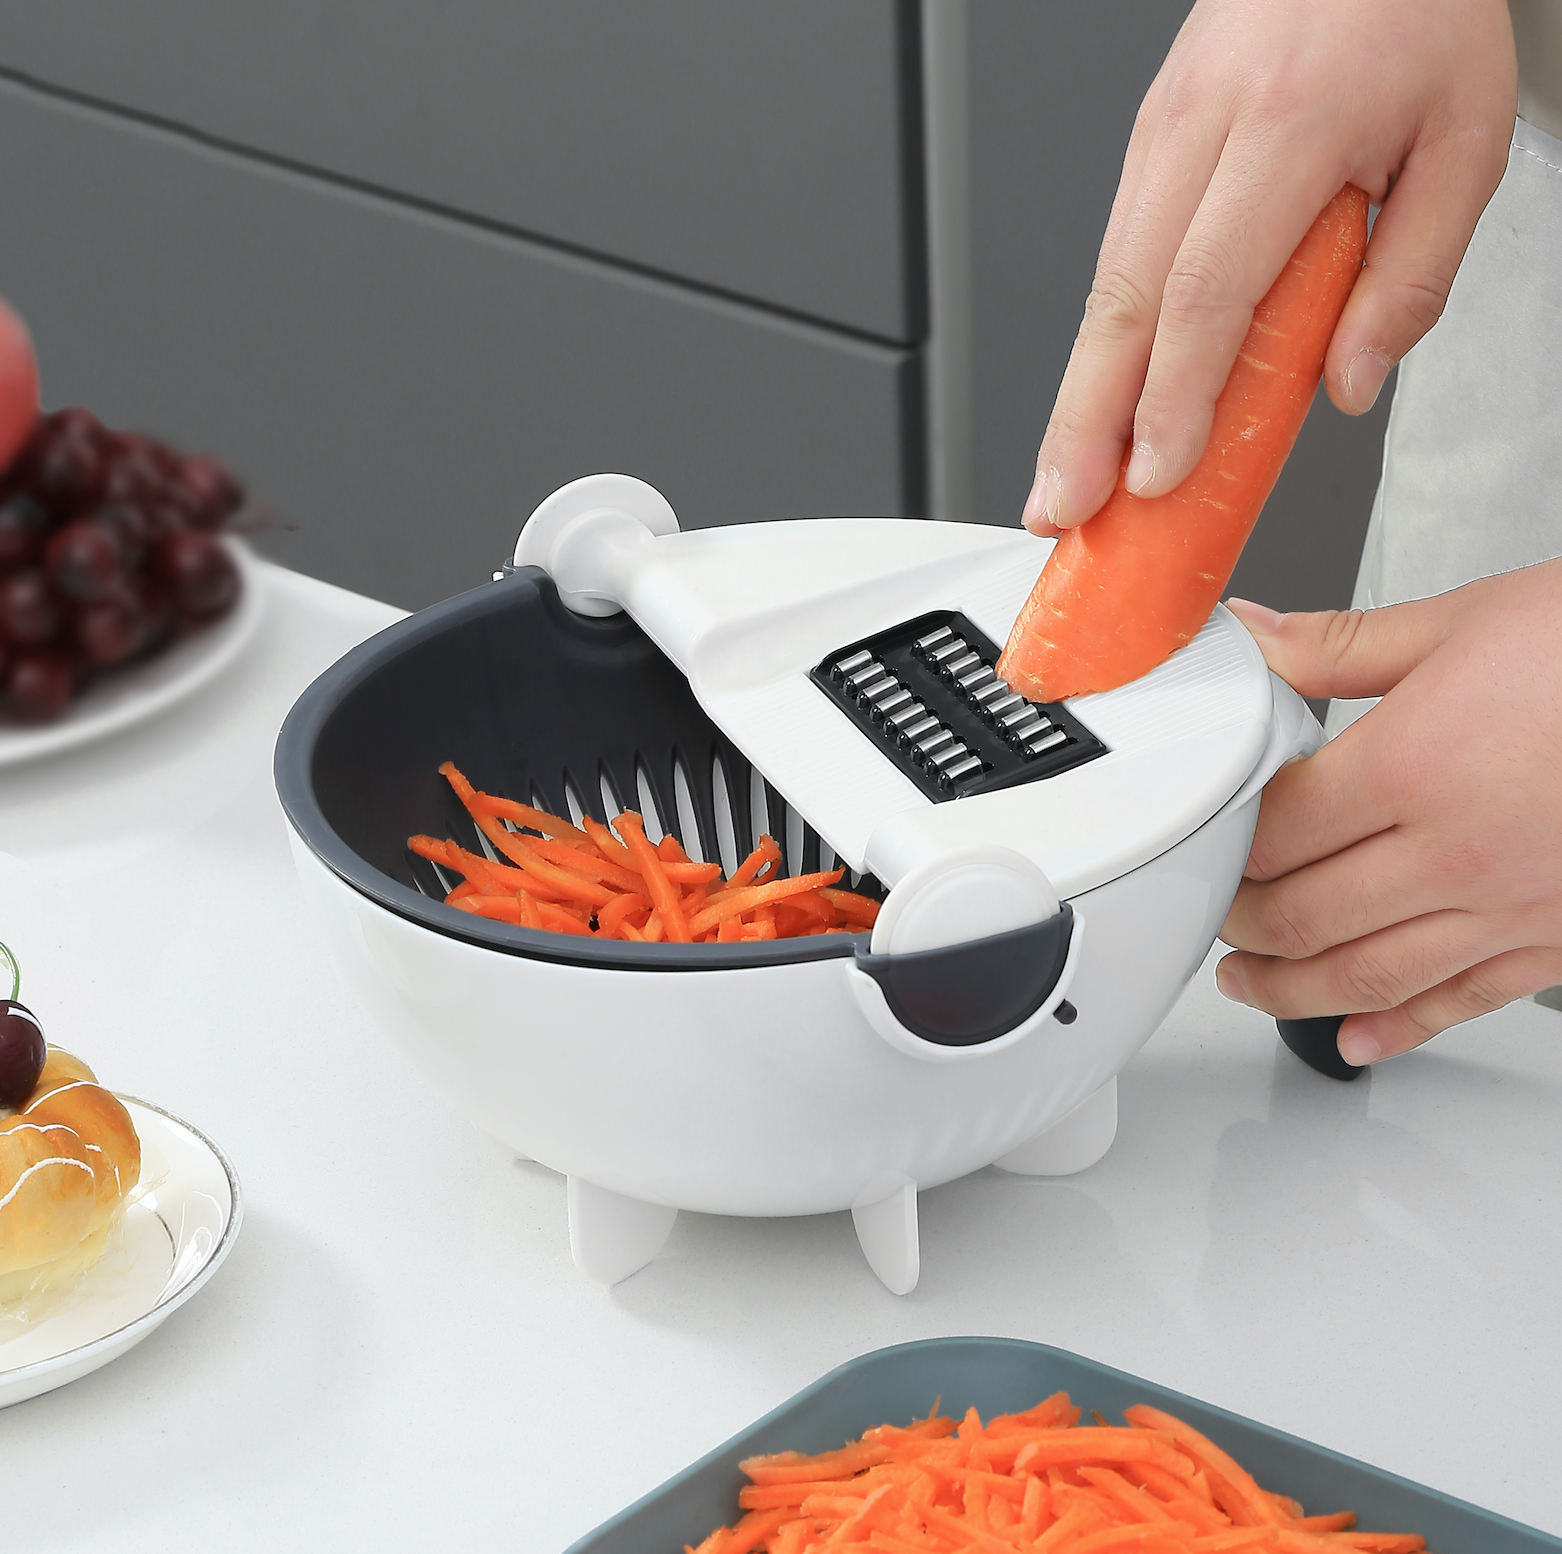 Tagliaverdure 4 in 1  utensile de cucina multifunzione verdure frutta -  Ozayti IT (Staging)